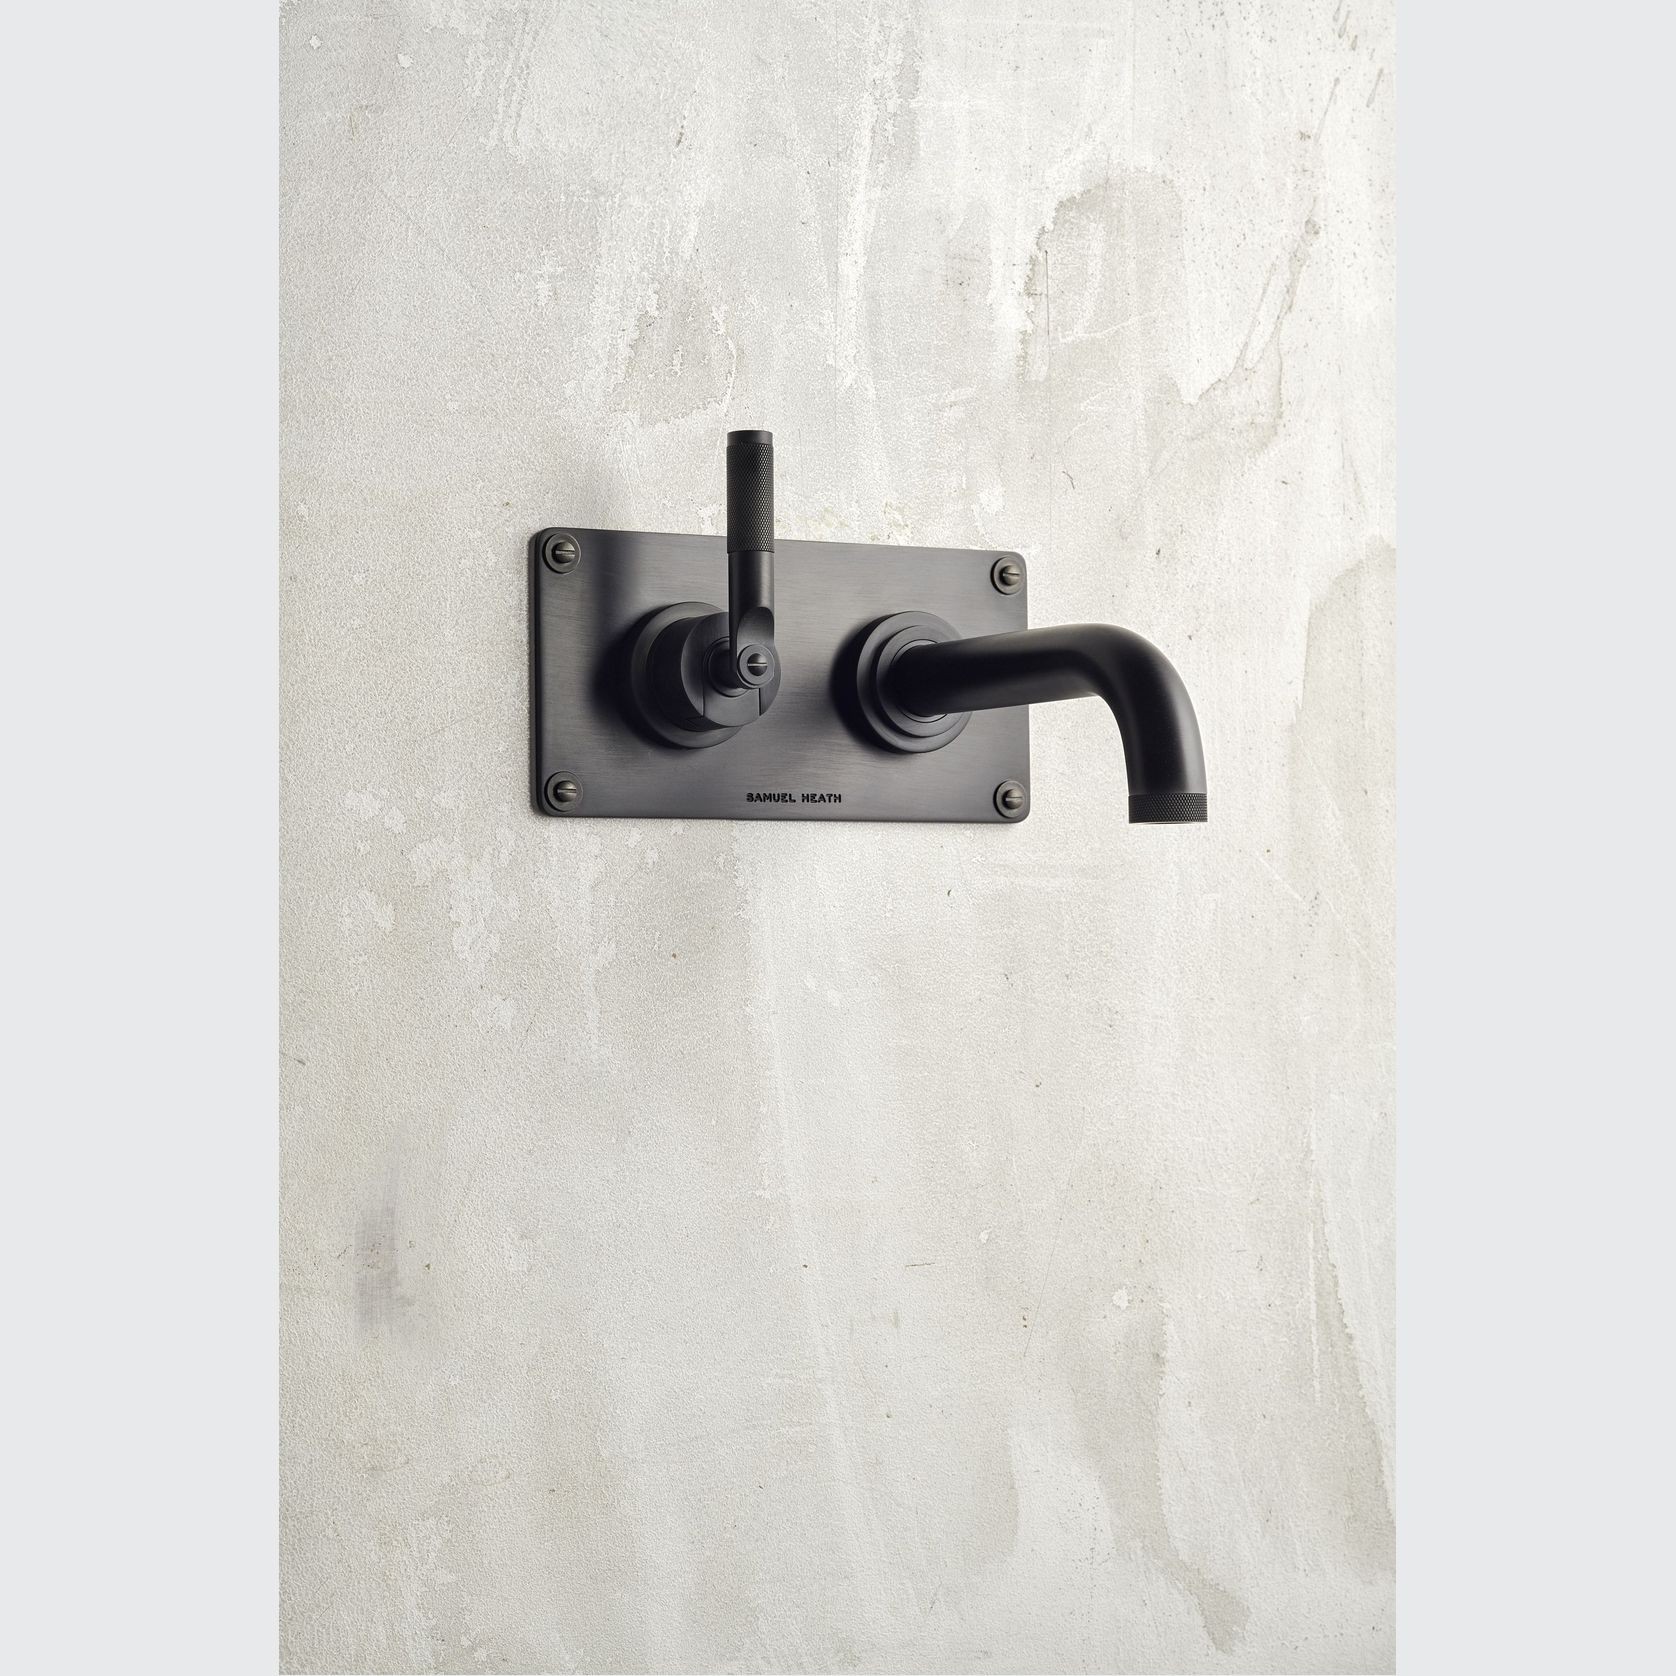 Samuel Heath | Landmark Showers, Mixers & Taps gallery detail image